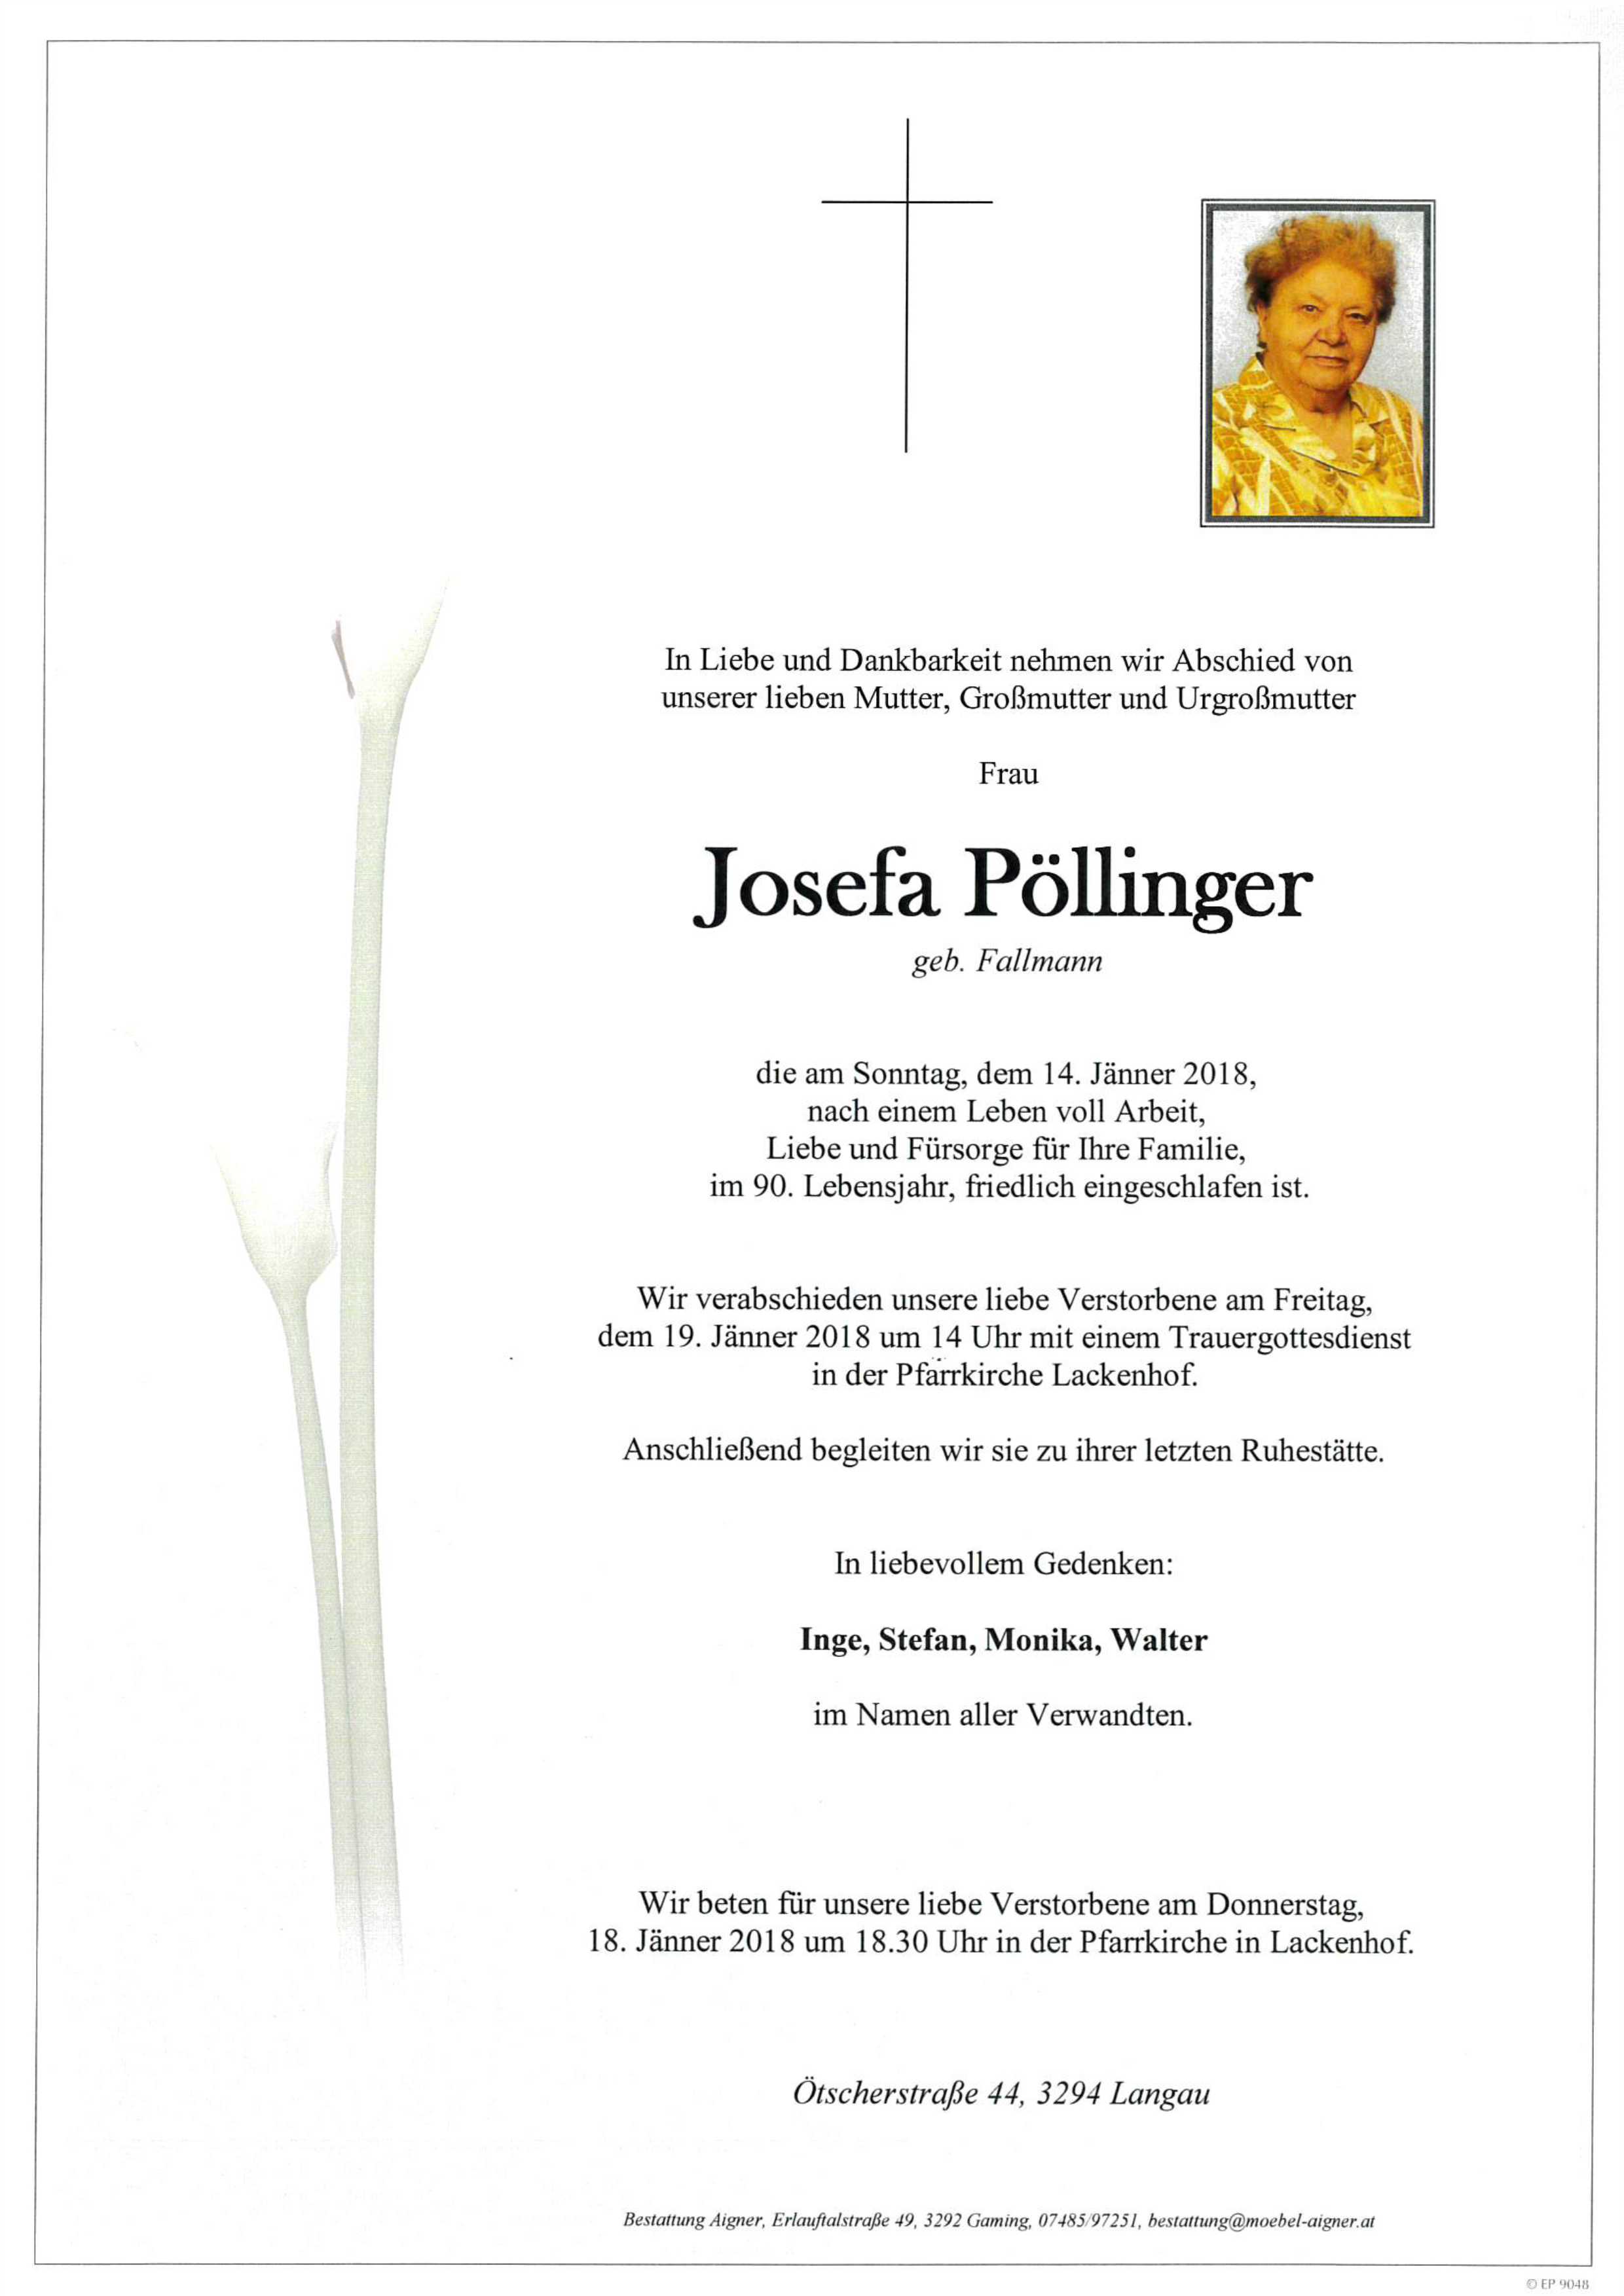 Josefa Pöllinger